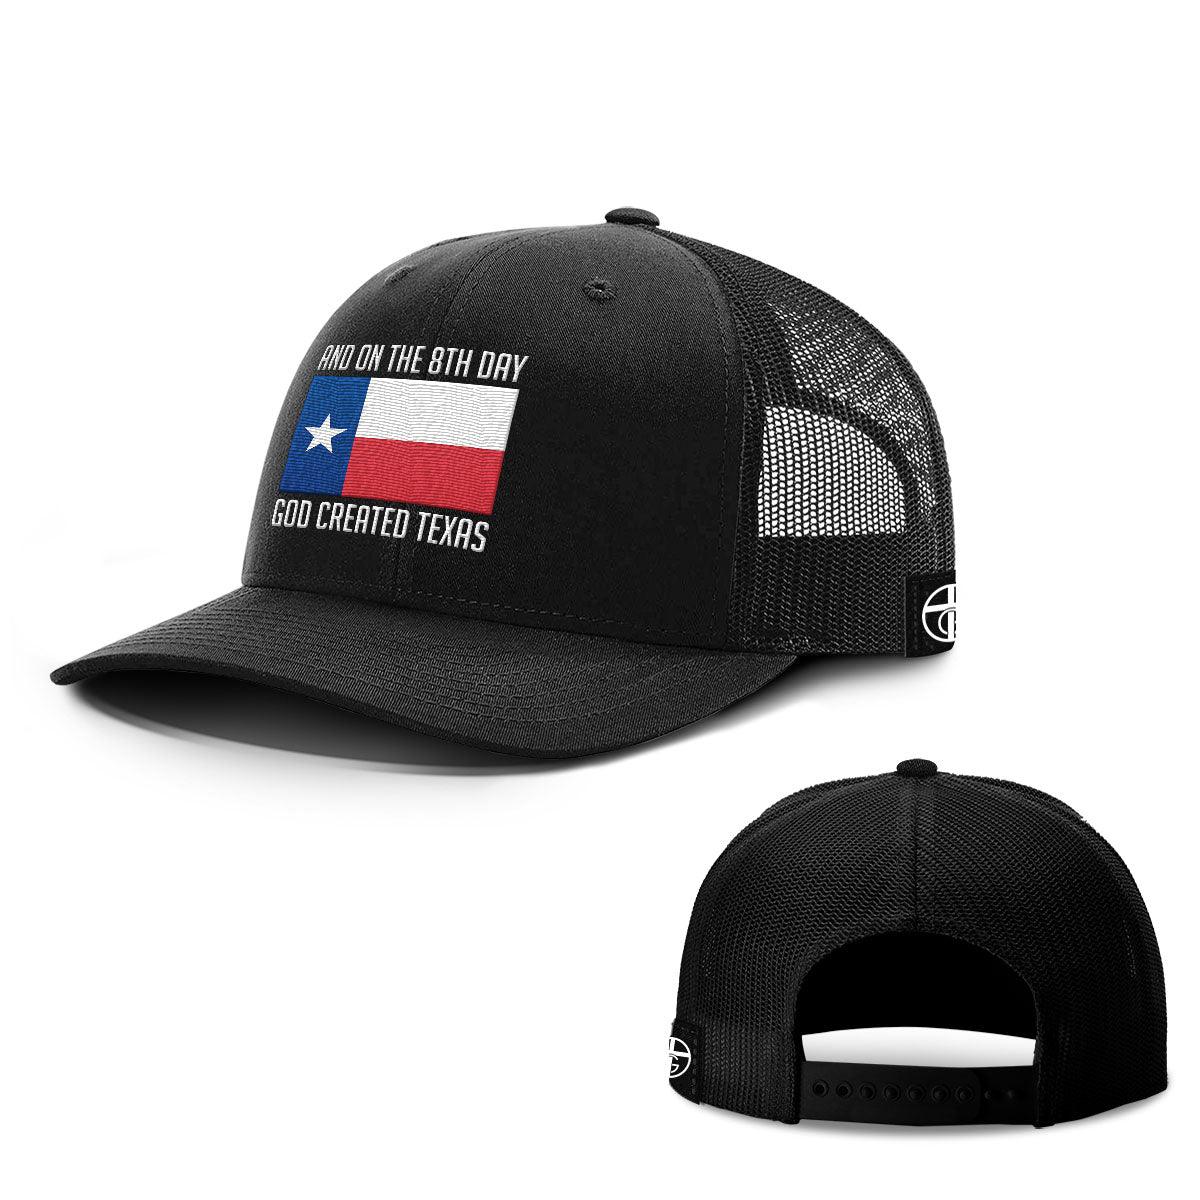 God Created Texas Hats